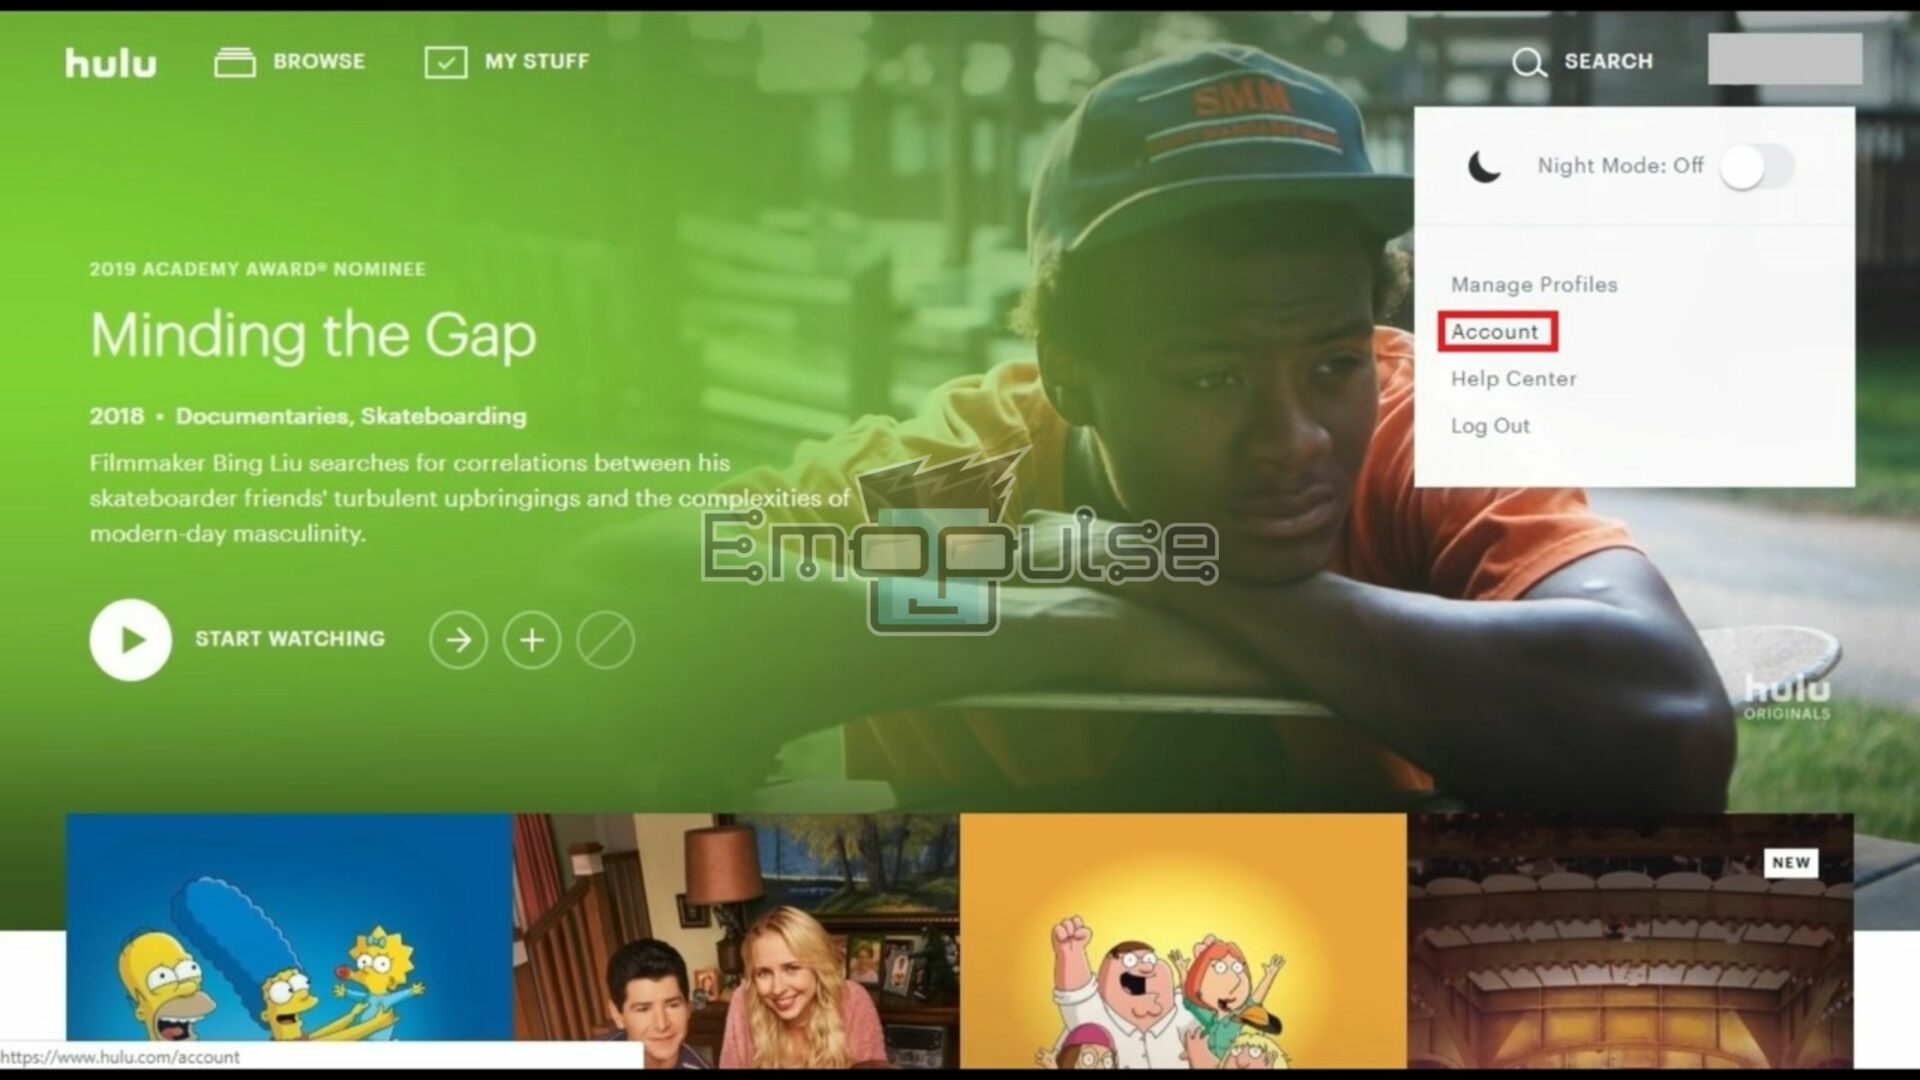 Account Option on Hulu Homepage